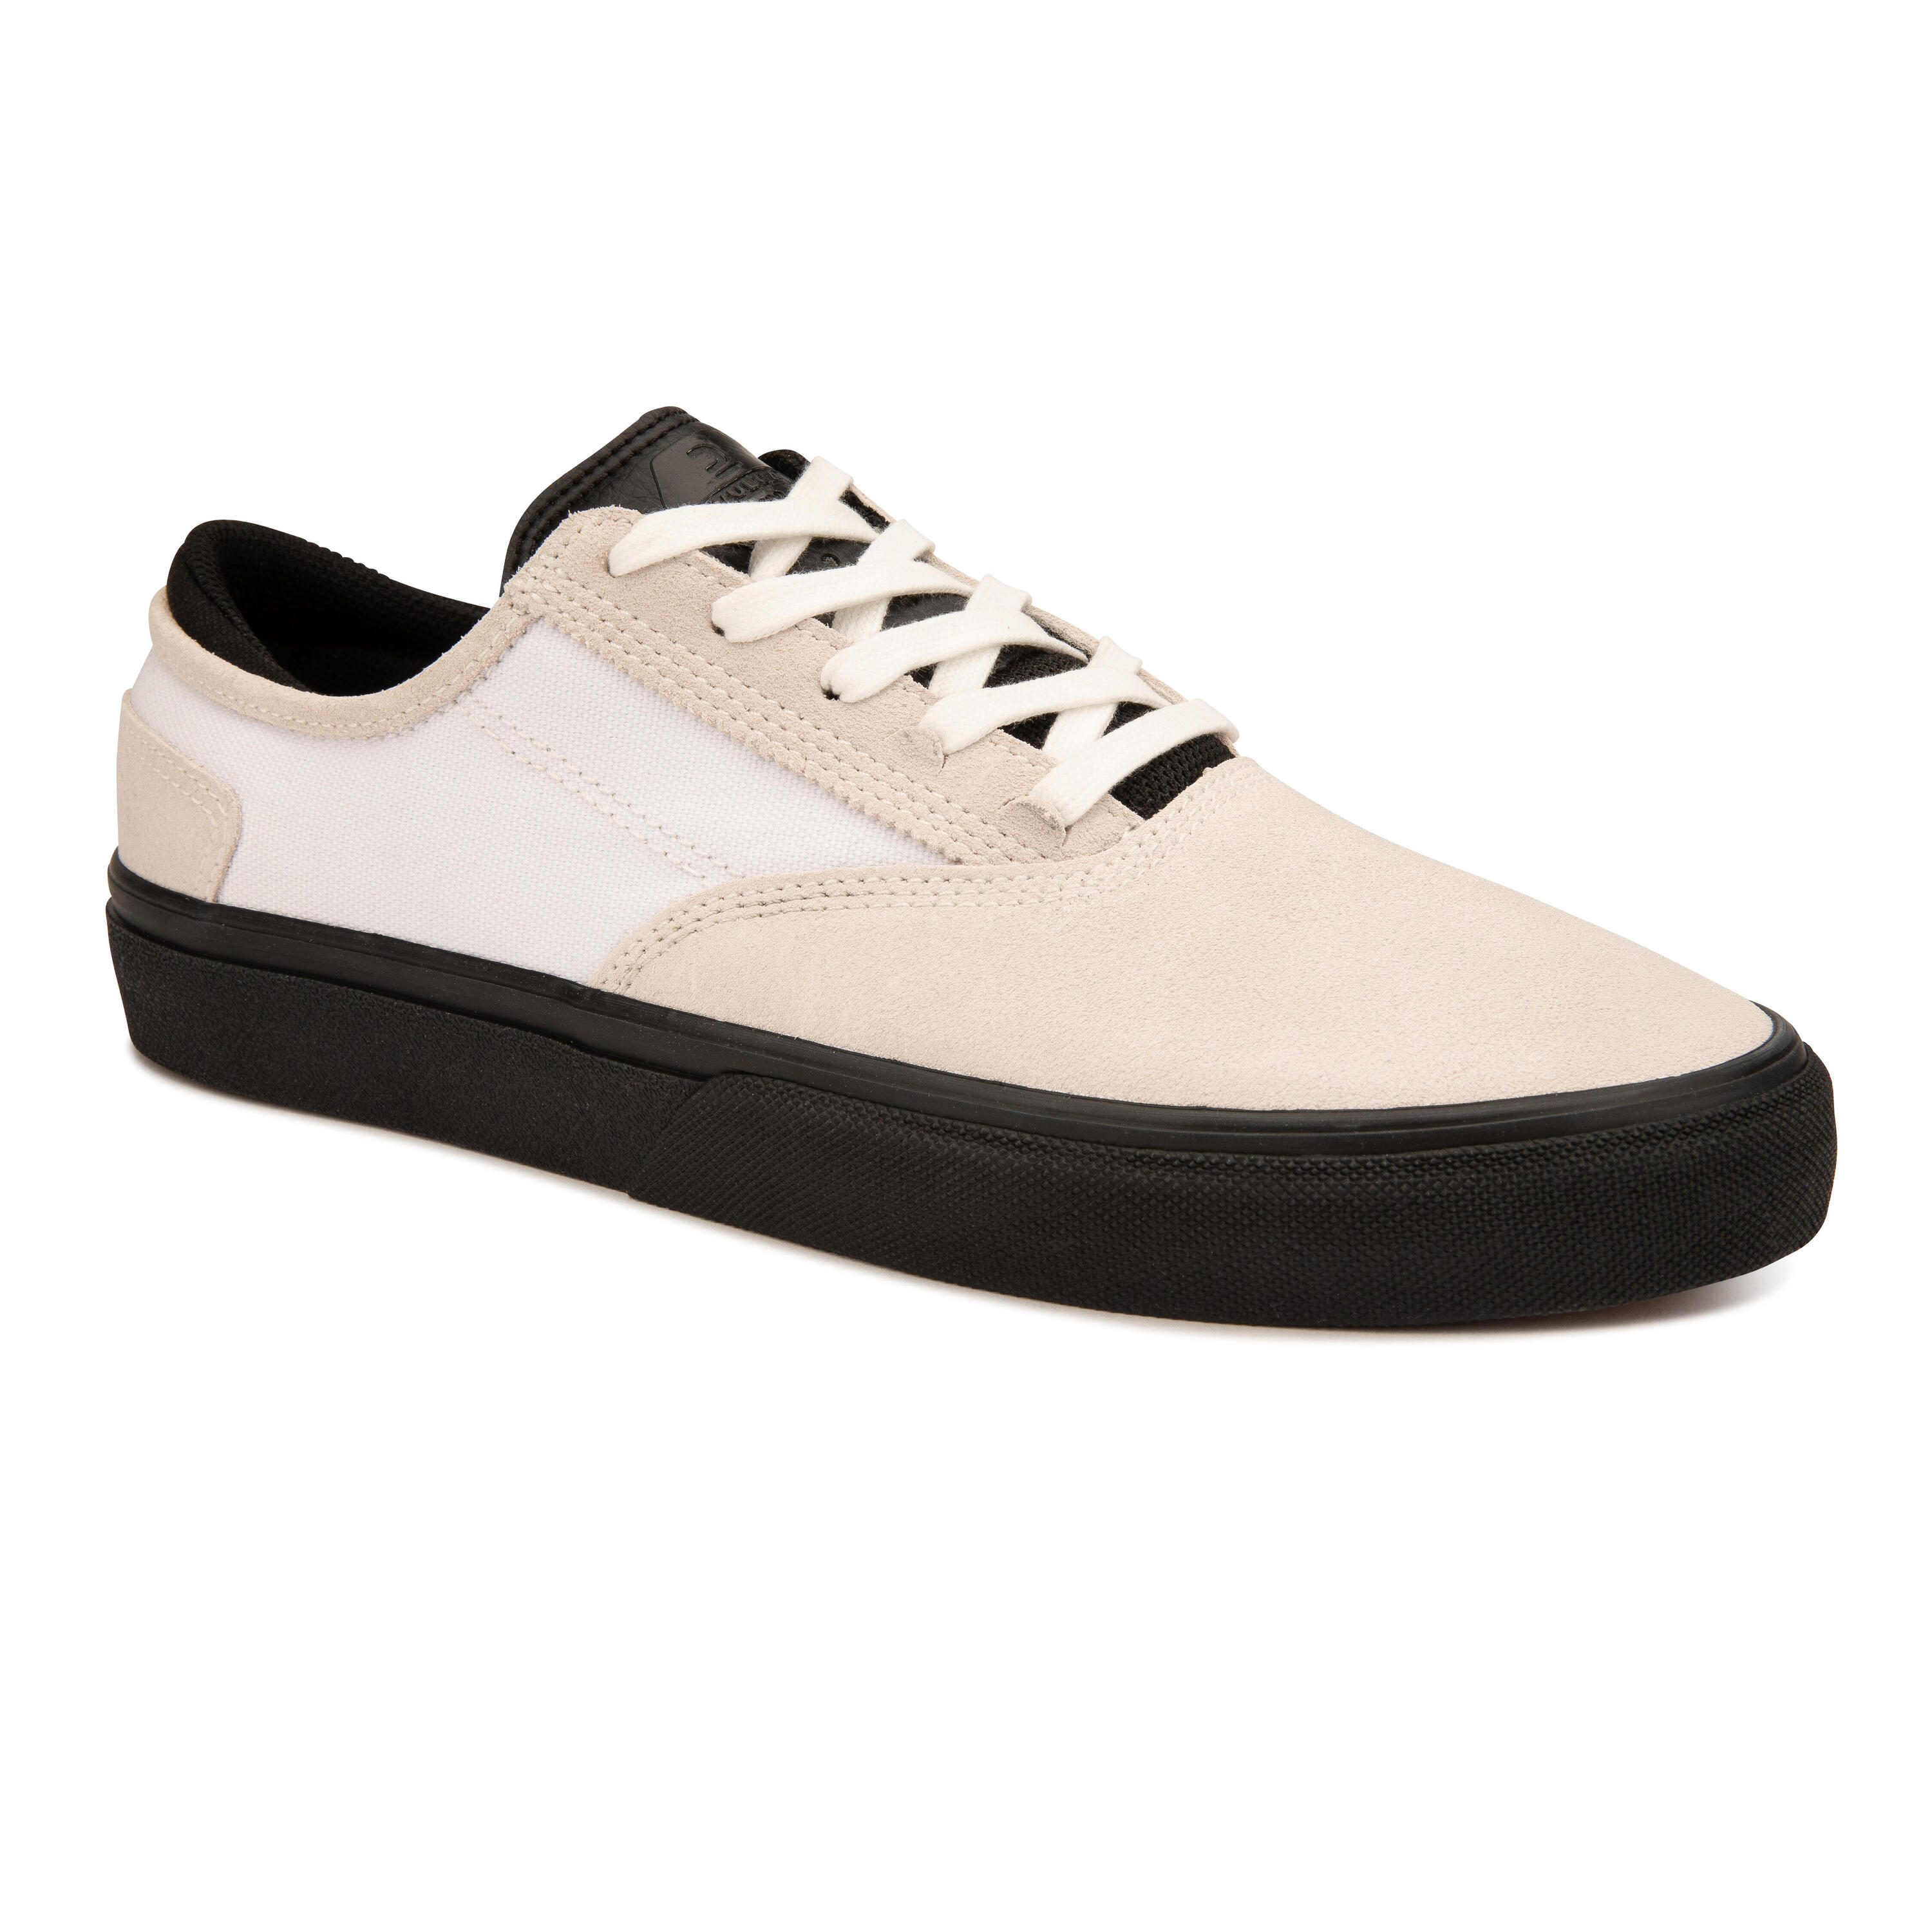 OXELO Adult Vulcanised Skate Shoes Vulca 500 II - White/Black